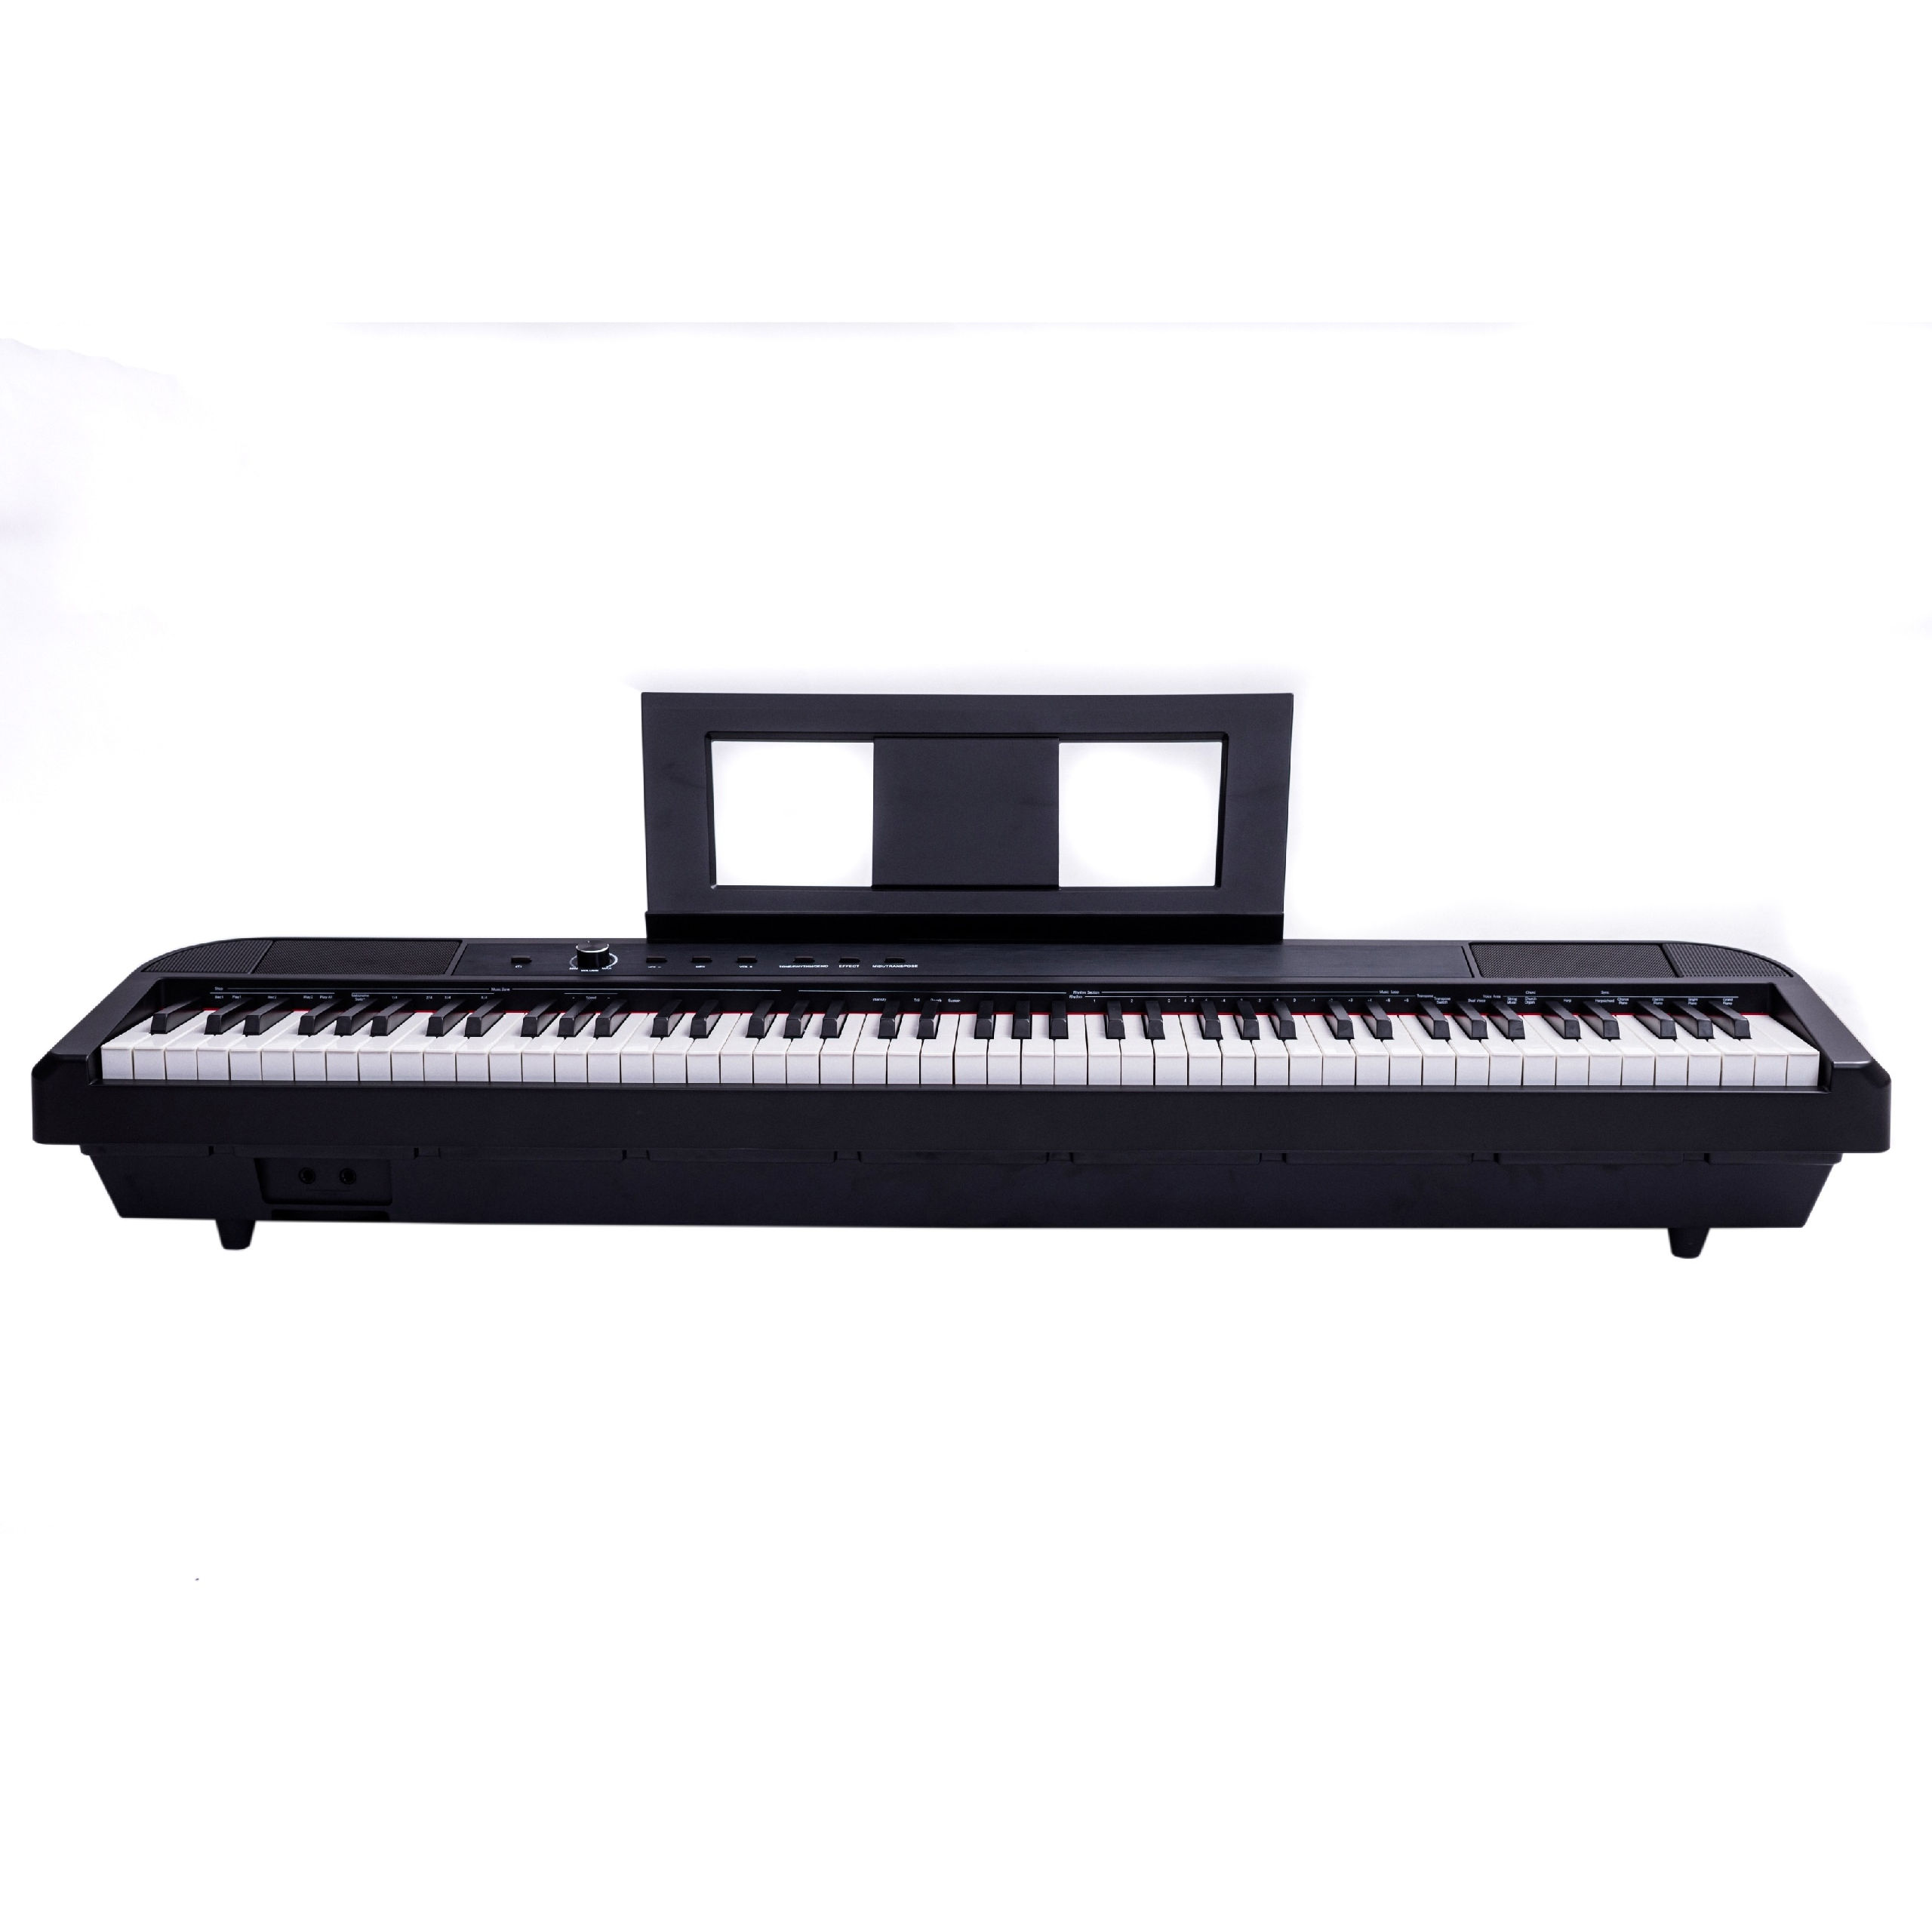 BEISITE B-189 Pro Lite 3 Компактное Цифровое пианино